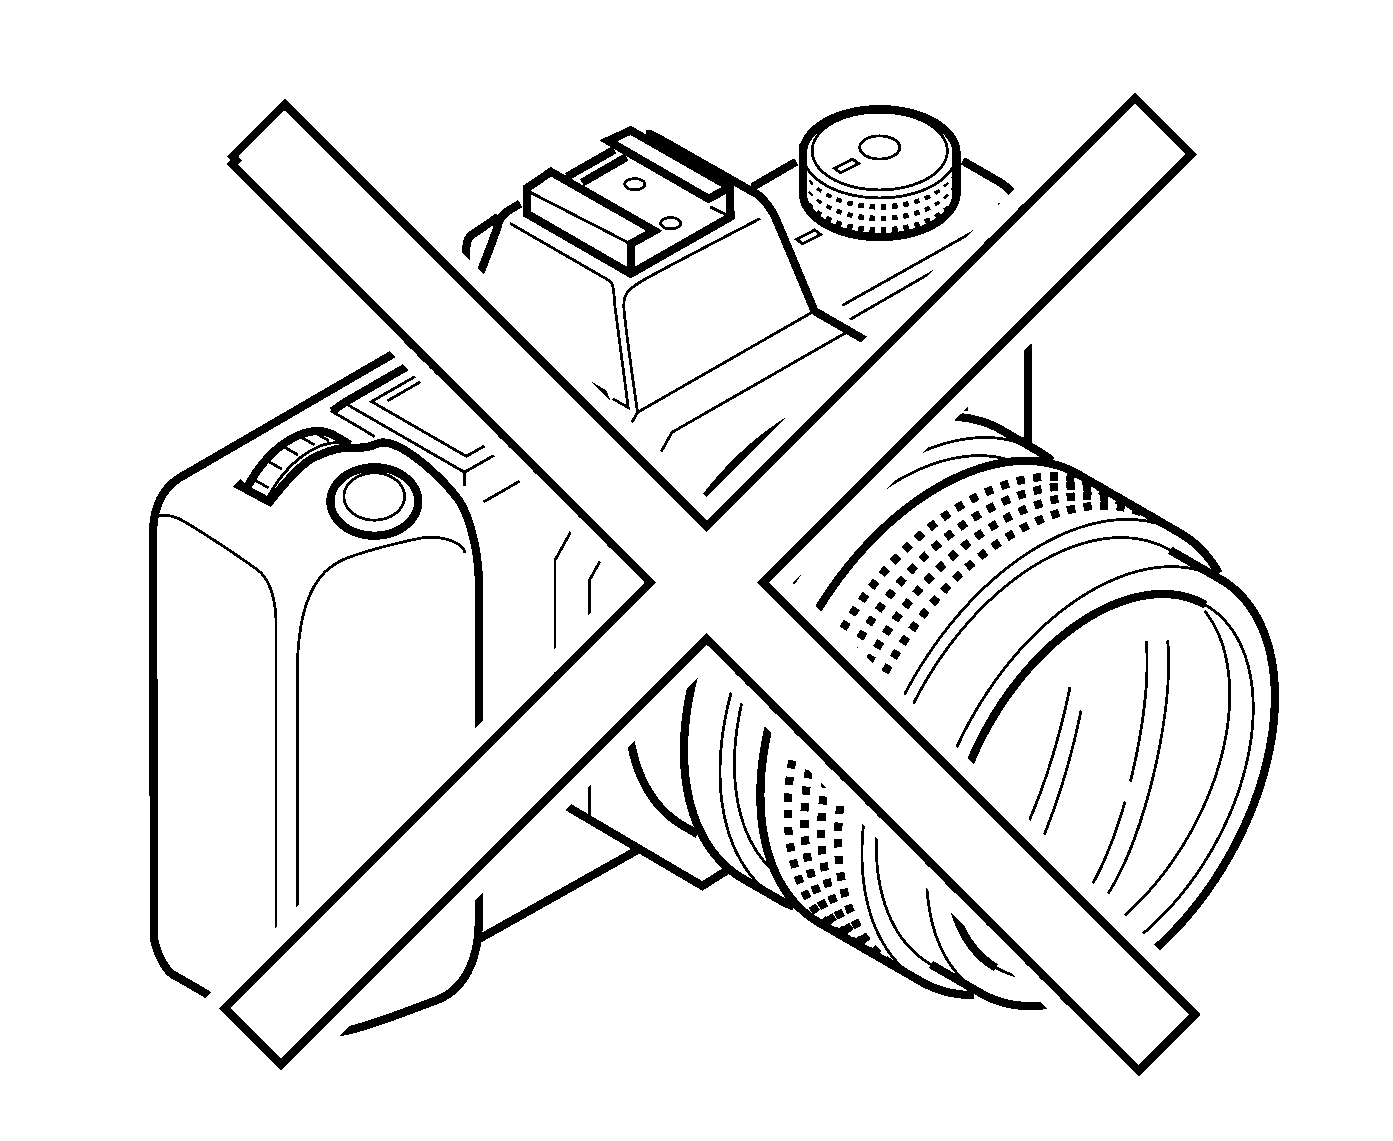 Individual parts  - Crafter - cr